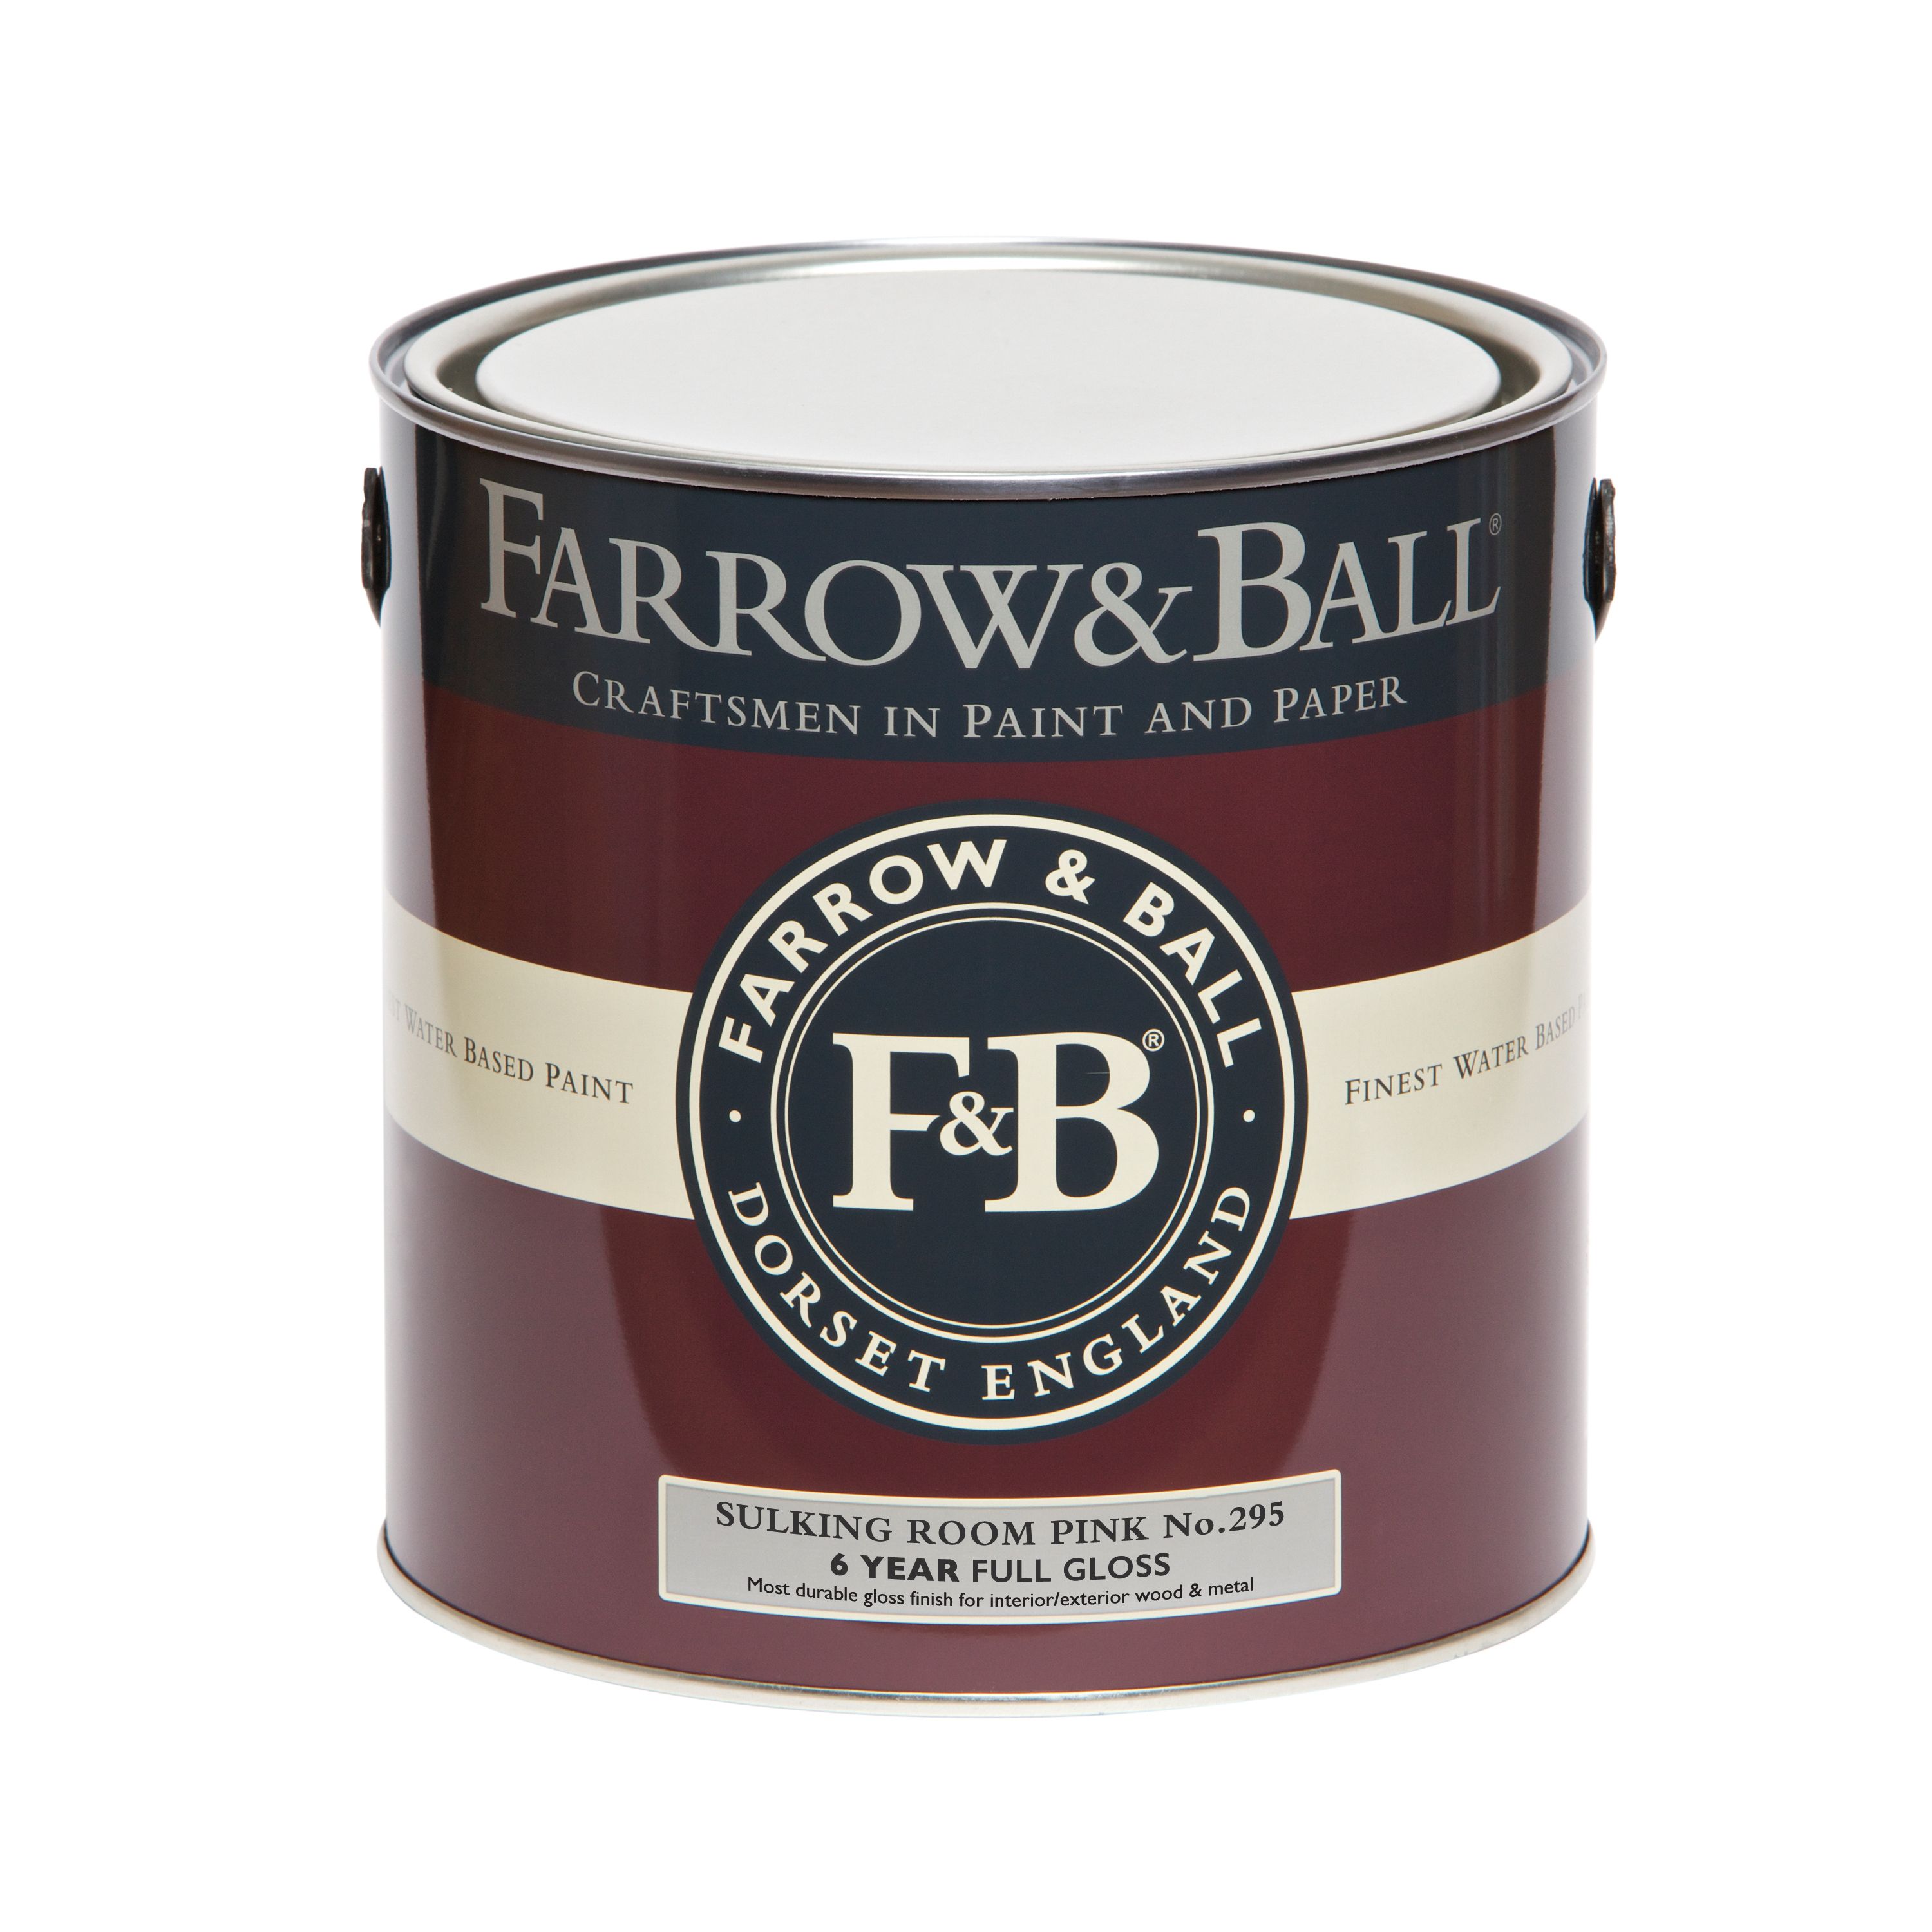 Farrow & Ball Sulking room pink Gloss Metal & wood paint, 2.5L